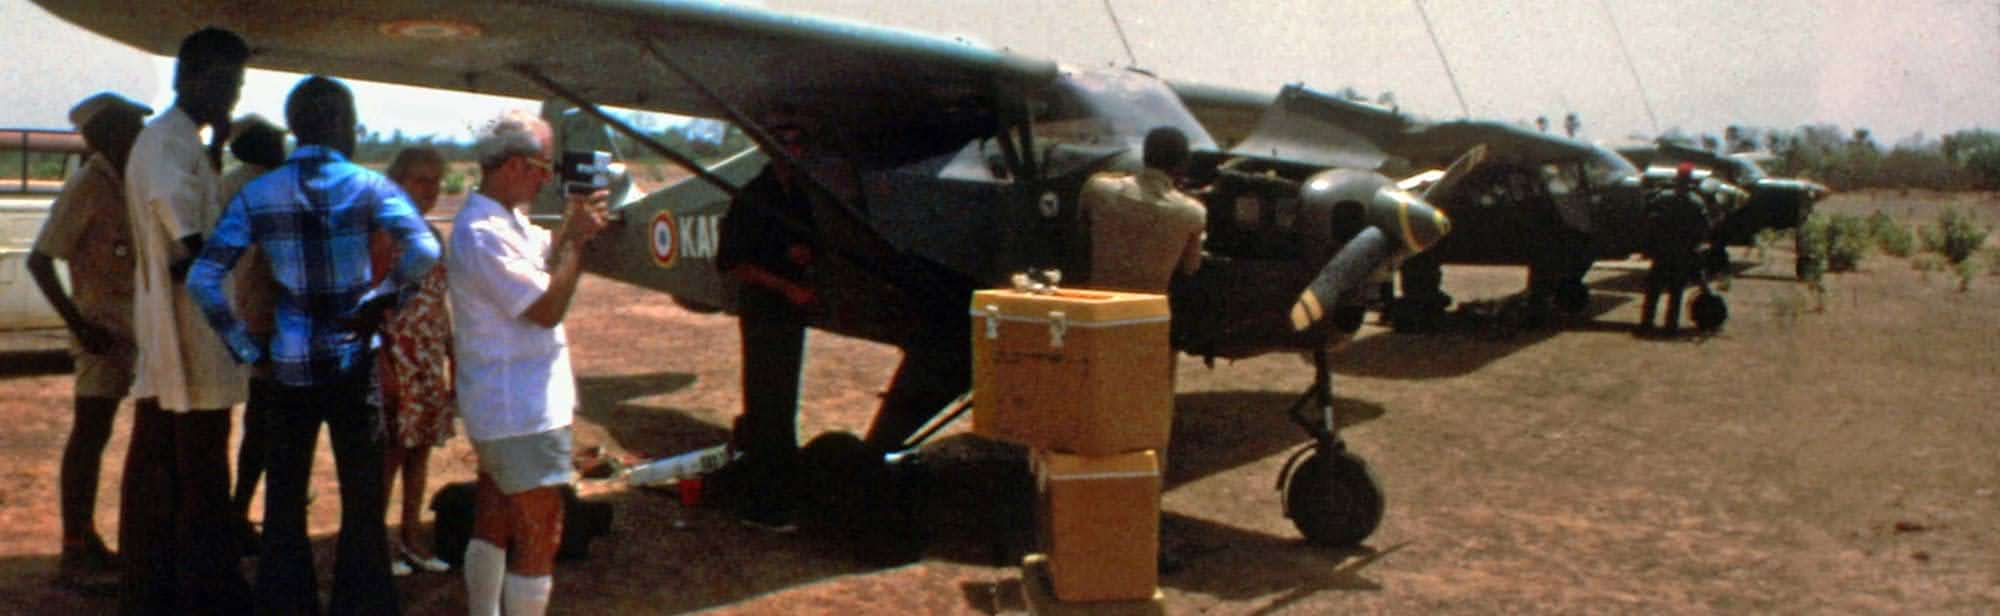 PA-22 au parc national du Niololo-Koba en 1974 Alat.fr